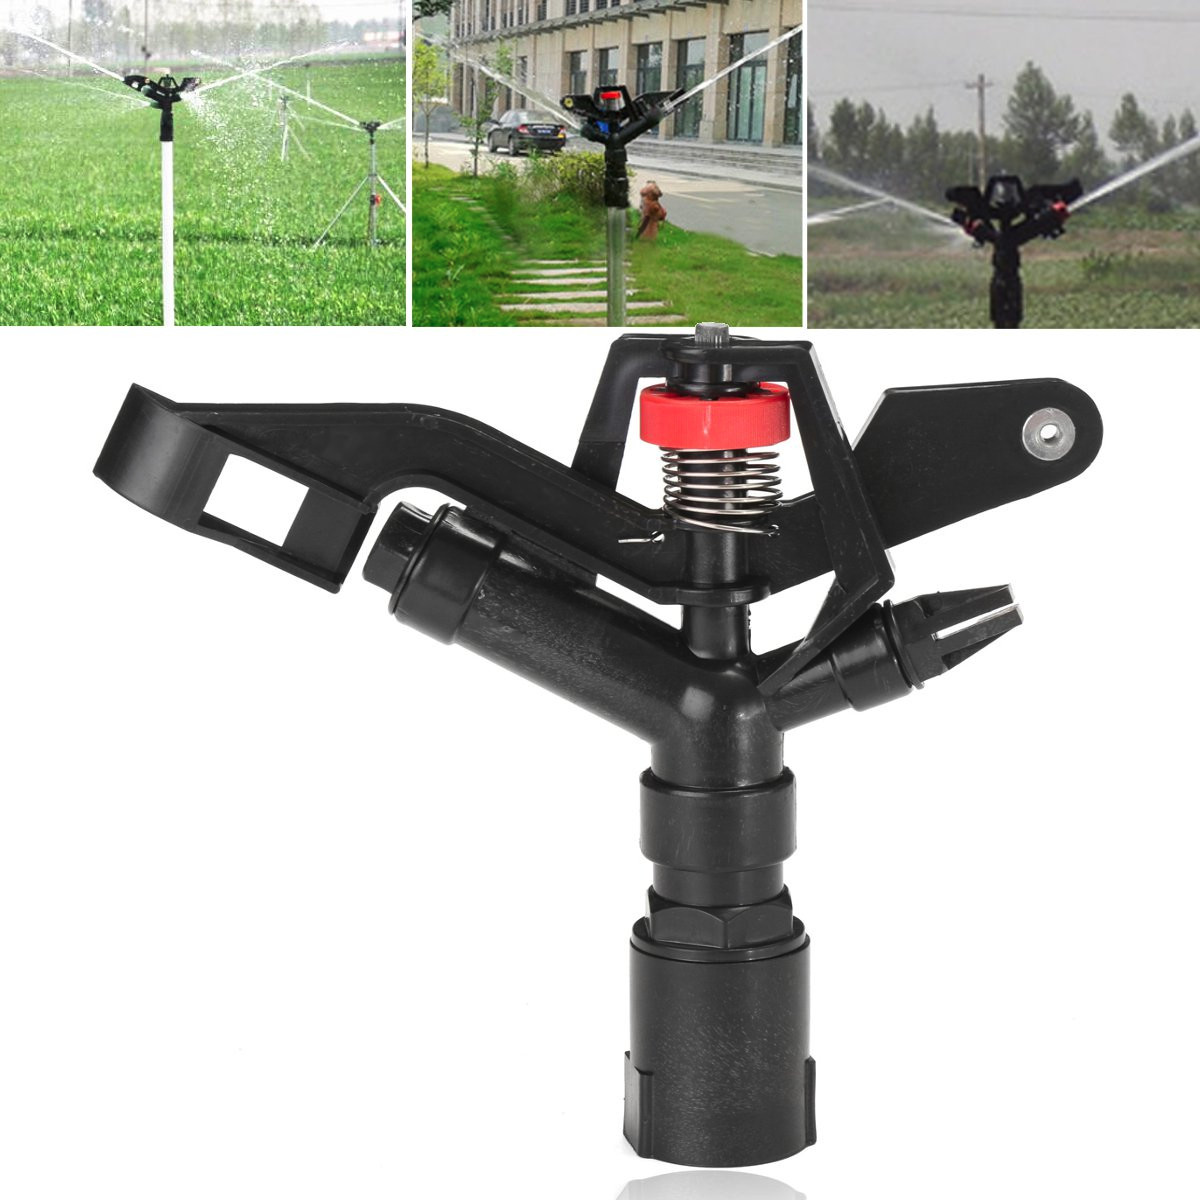 

1'' Inch DN25 Water Irrigation Gun Sprinkler Nozzle Lawn Planting Spray Head